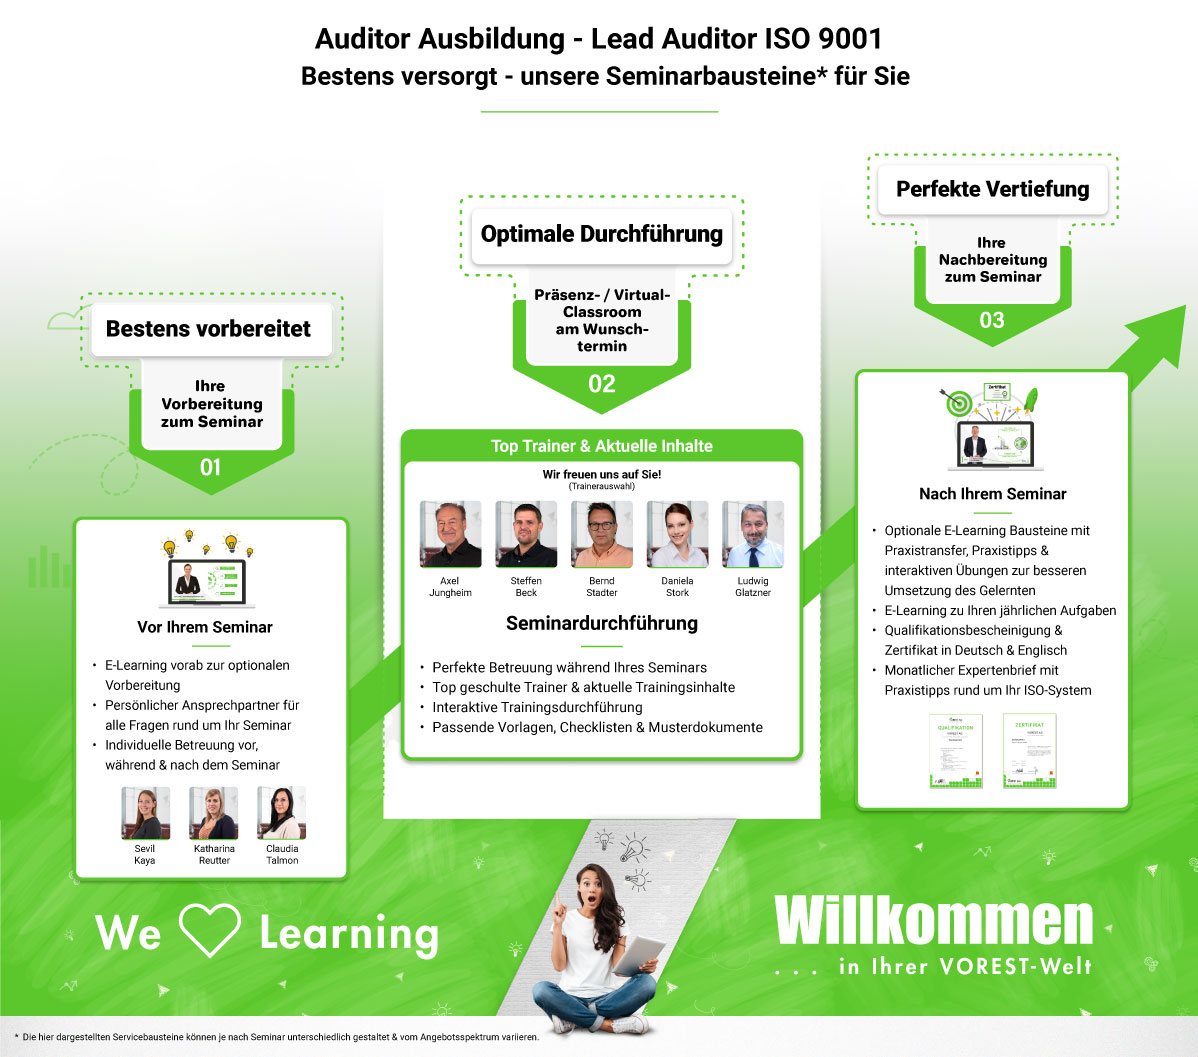 Auditor Ausbildung - Lead Auditor ISO 9001